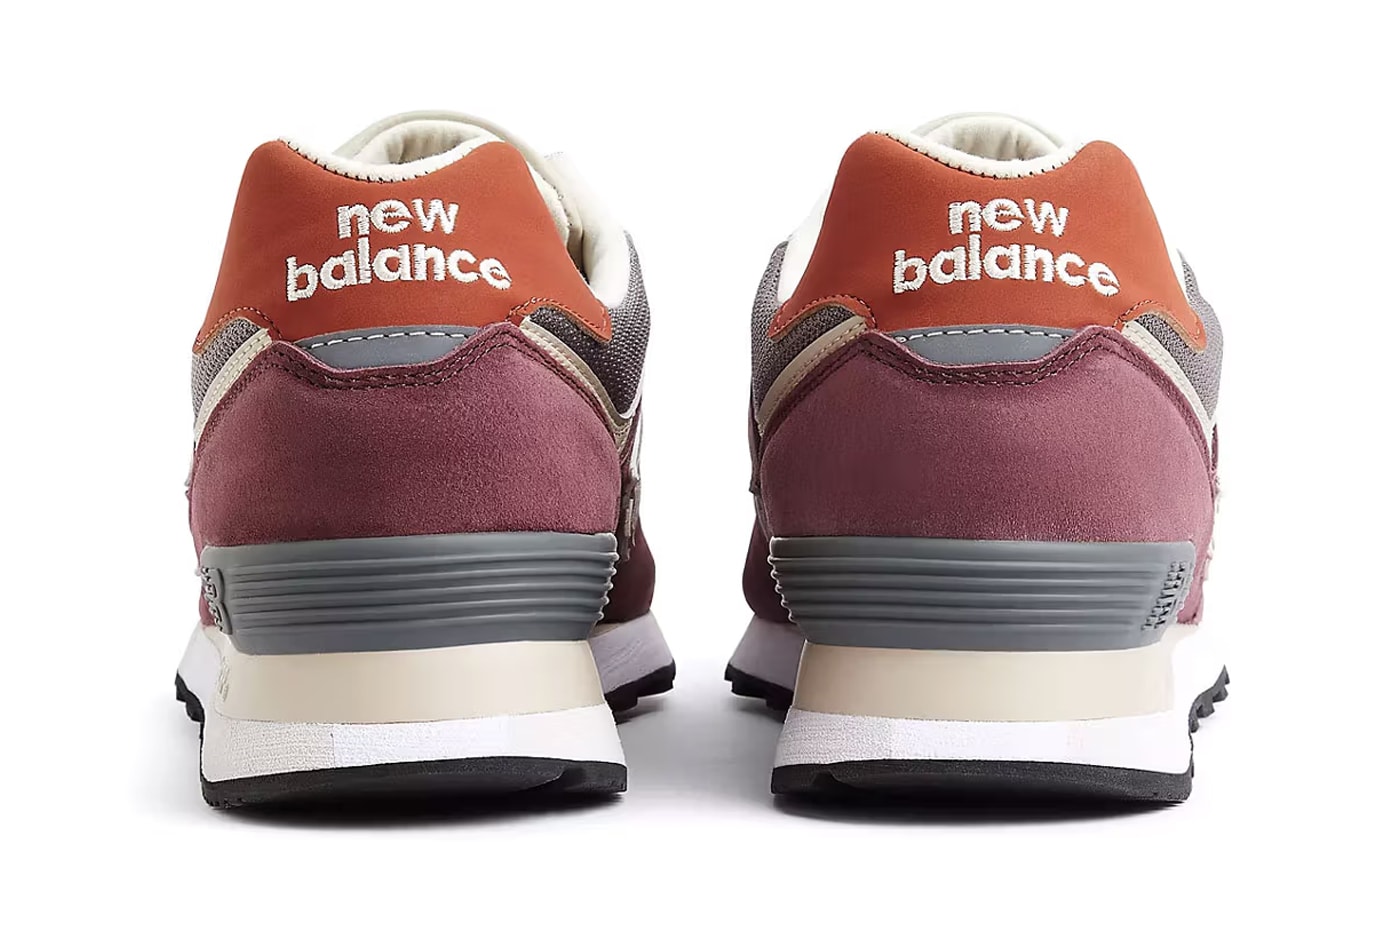 New Balance Made in UK Sneakers Fashion Footwear 576 Silhouette Shoes Trainers Streetwear England Scotland Wales Burgundy Orange